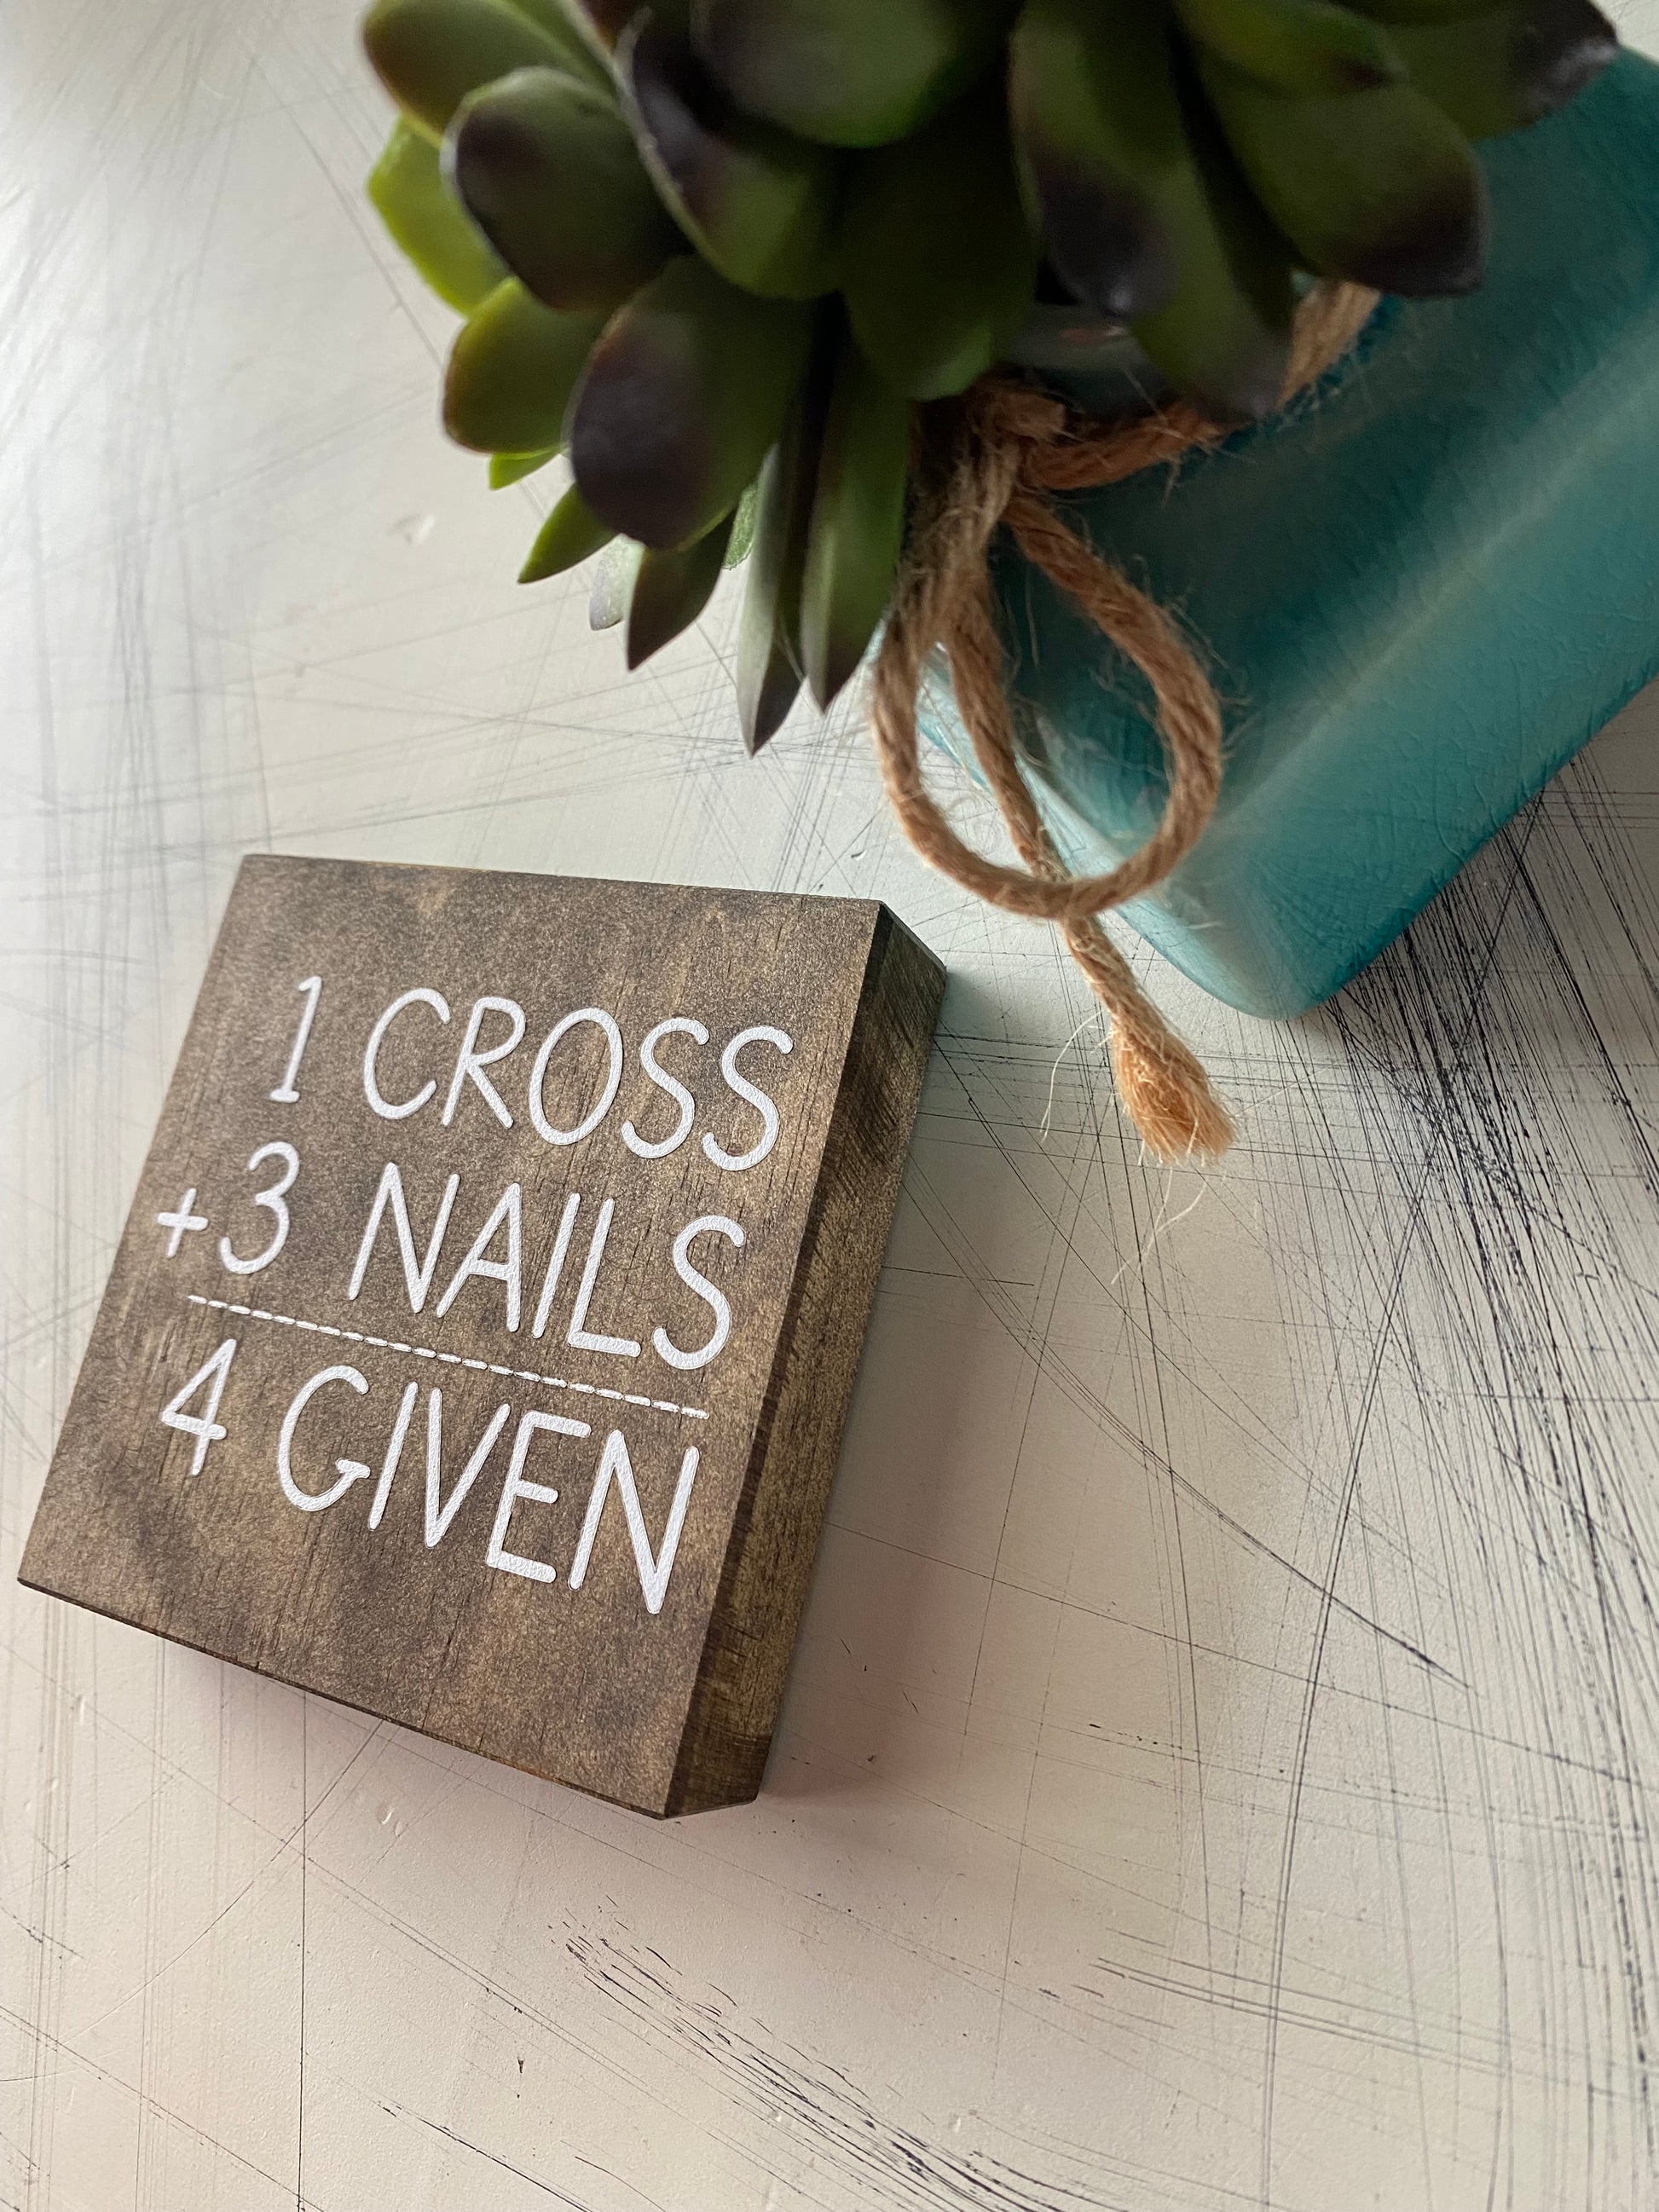 1 cross + 3 nails = 4 given . Novotny Designs mini wood sign